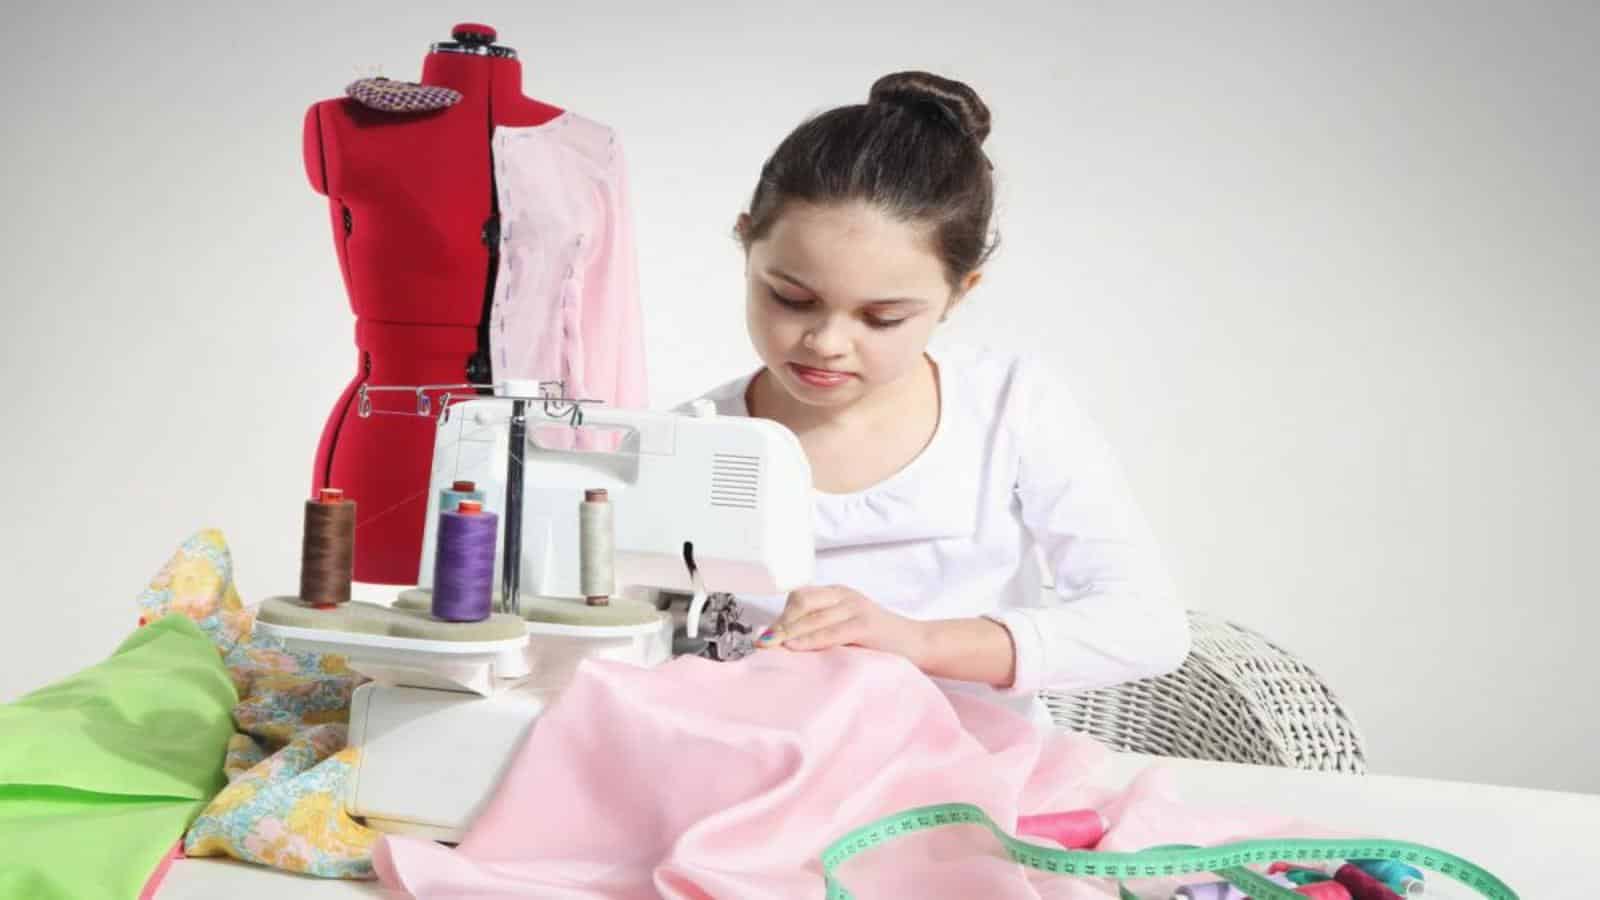 Best Singer Sewing Machine for Kids